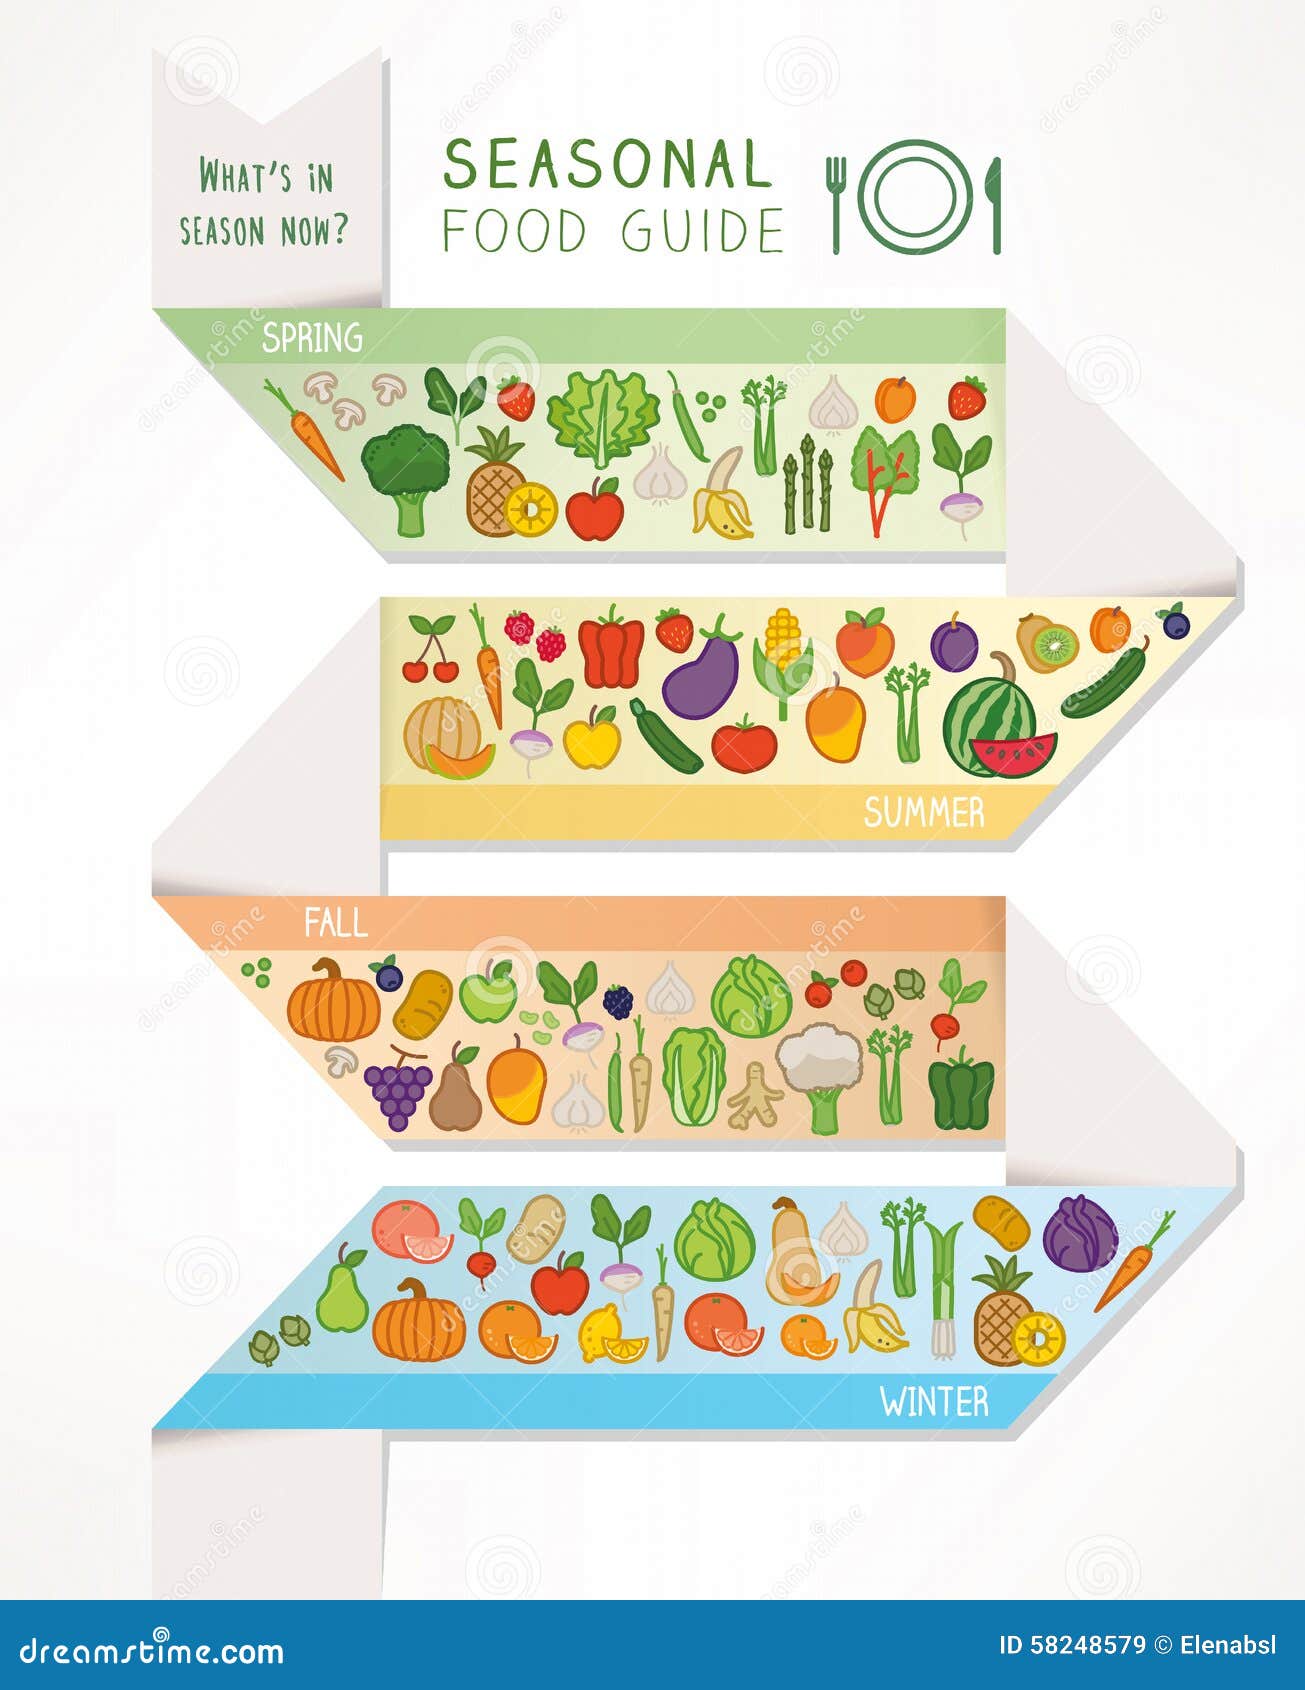 seasonal food and produce guide